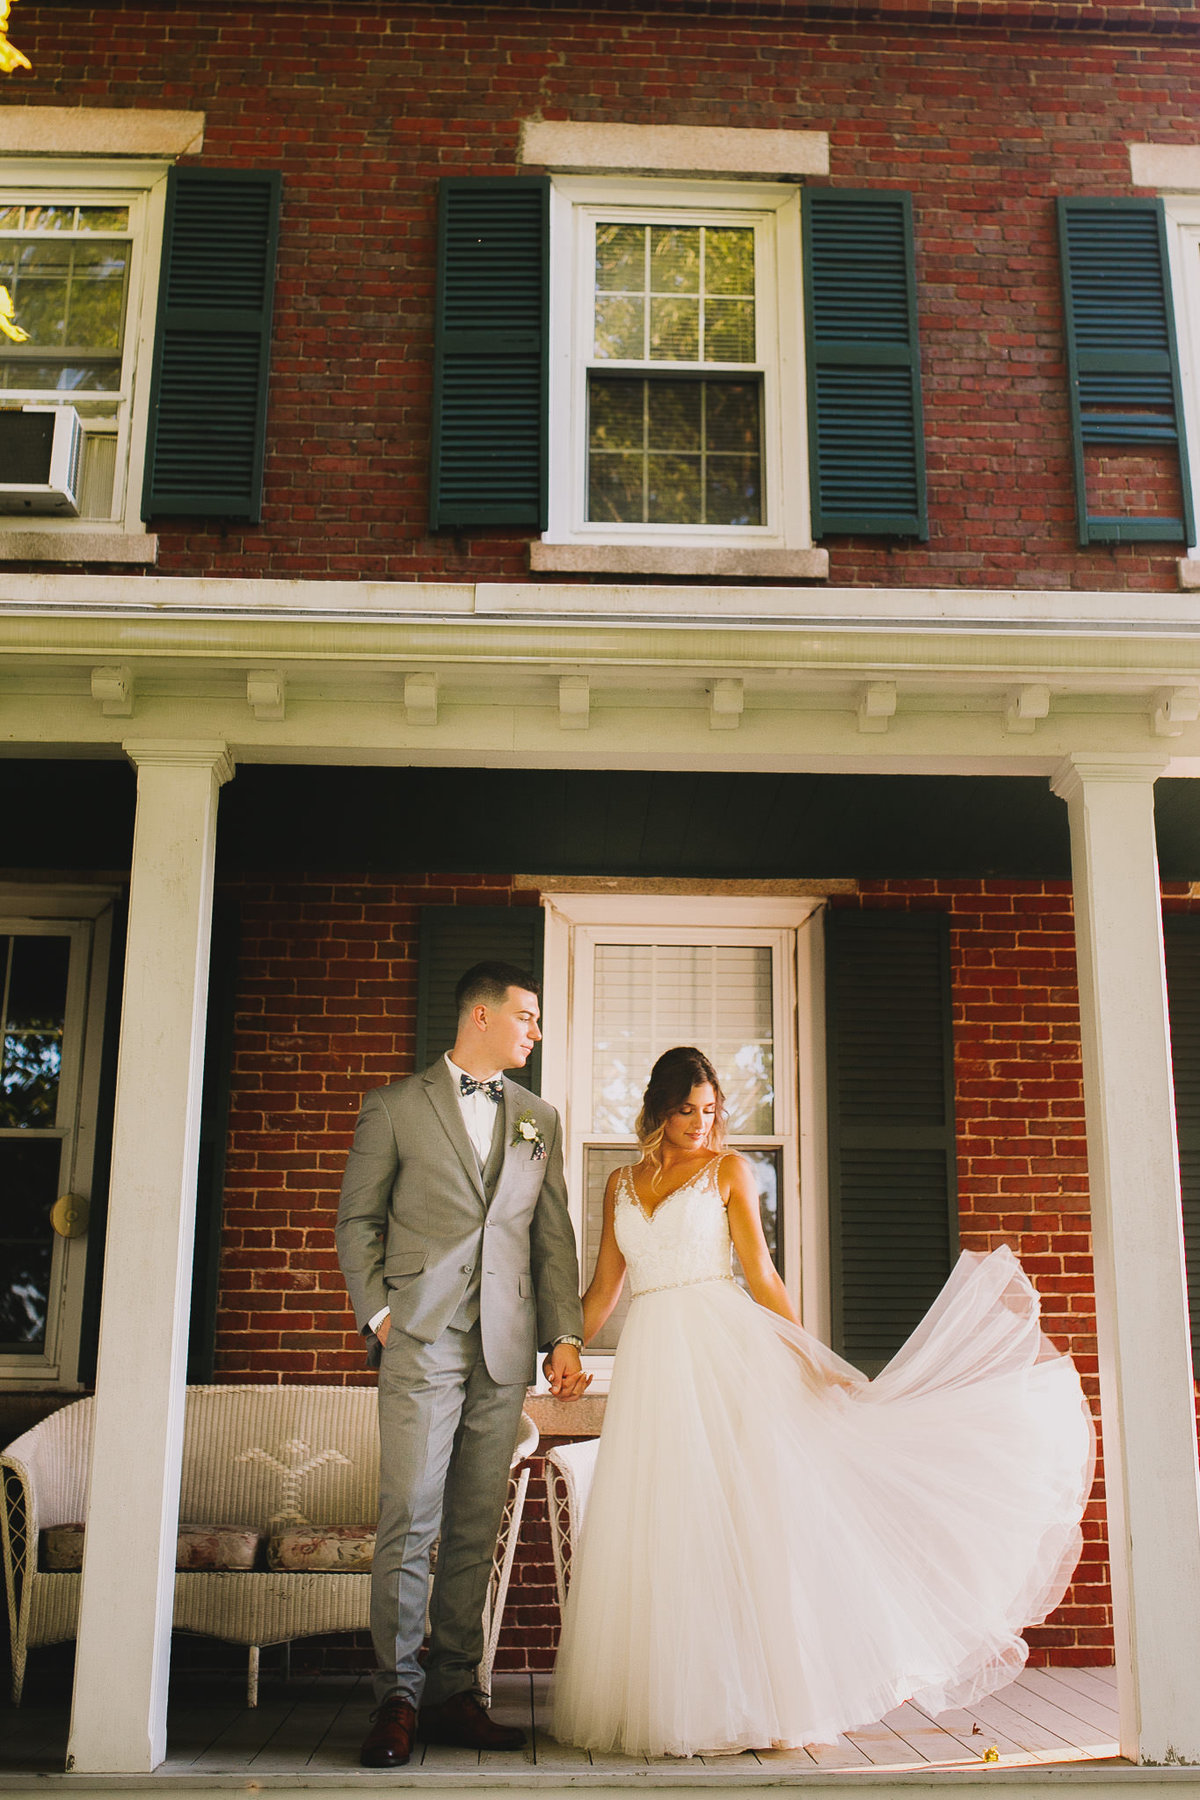 Archer Inspired Photography - Maine Wedding - SoCal International Traveling Photographer-710